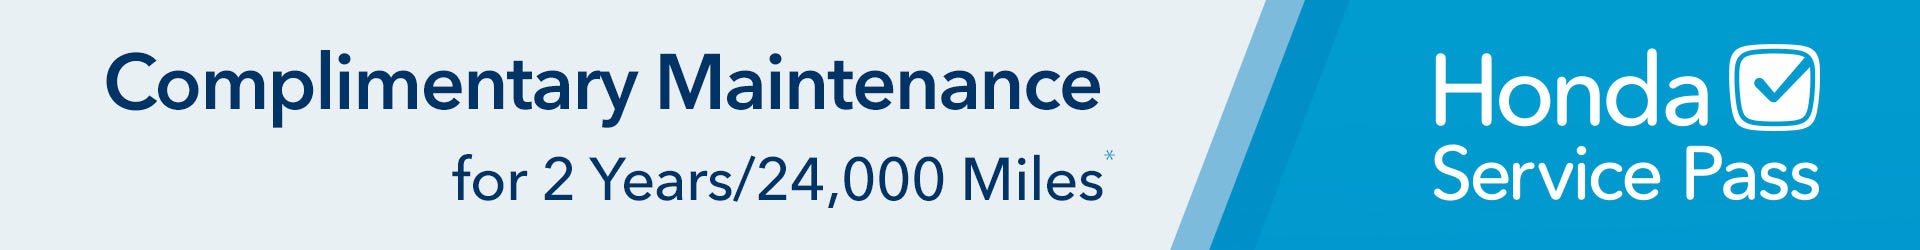 Complimentary Maintenance for 2 years / 24,000 Miles Honda Service Pass | Yuma Honda in Yuma AZ